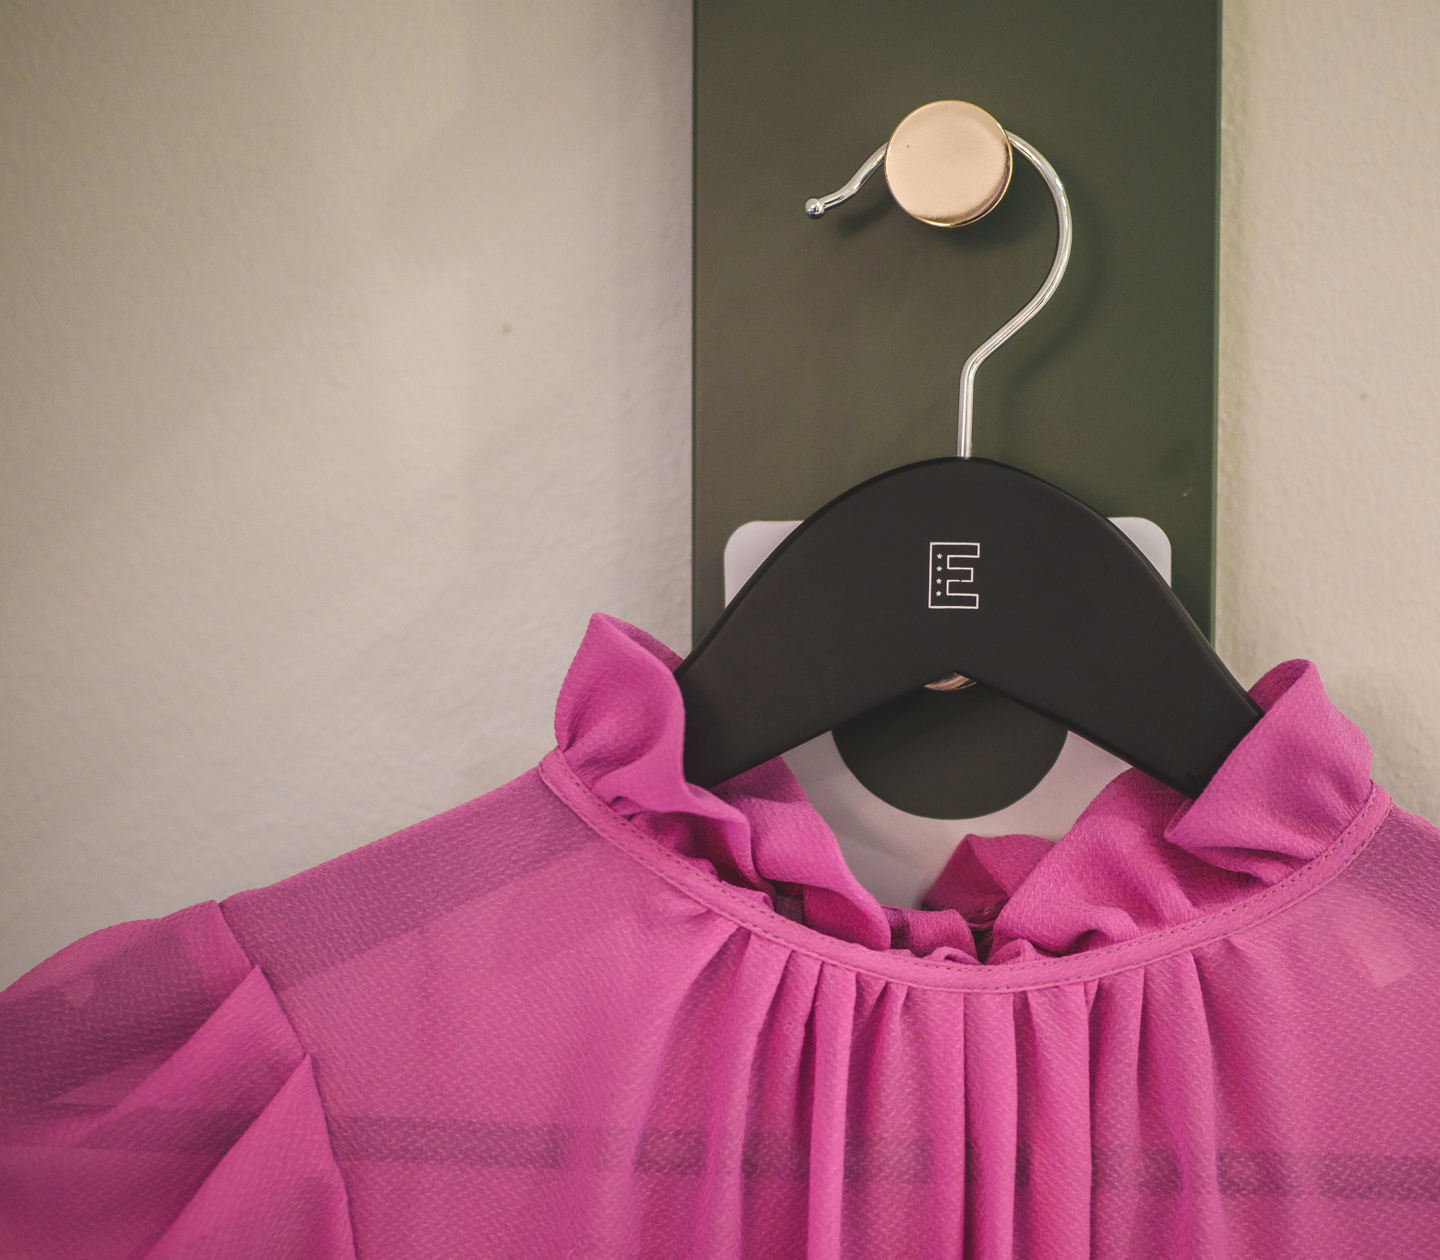 Pink dress hanging on a hanger